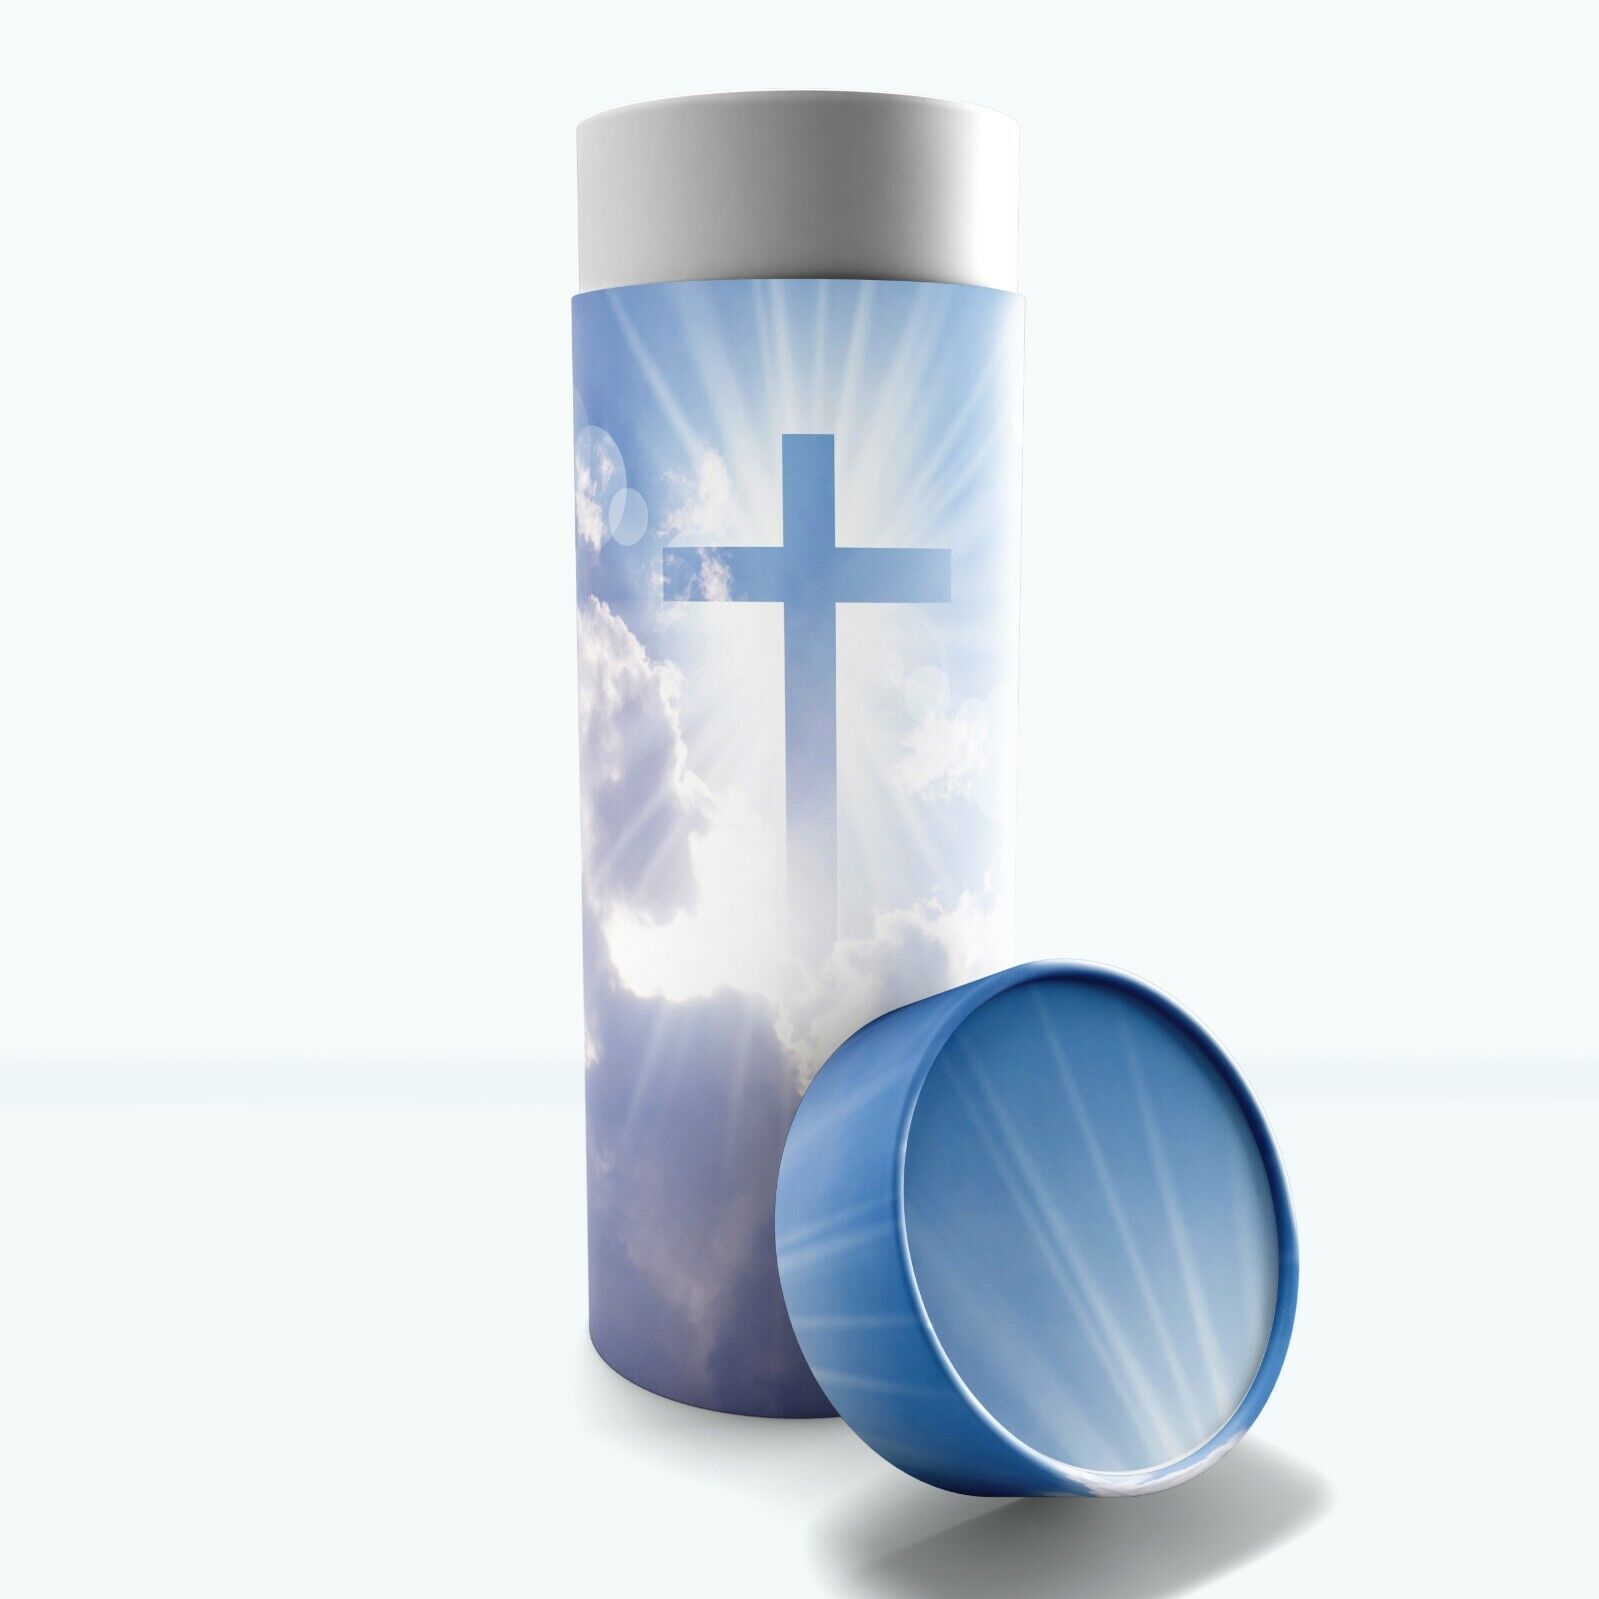 Heavenly Cross Cremation Urn, Biodegradable Urn, Scattering Tubes, Burial Urn